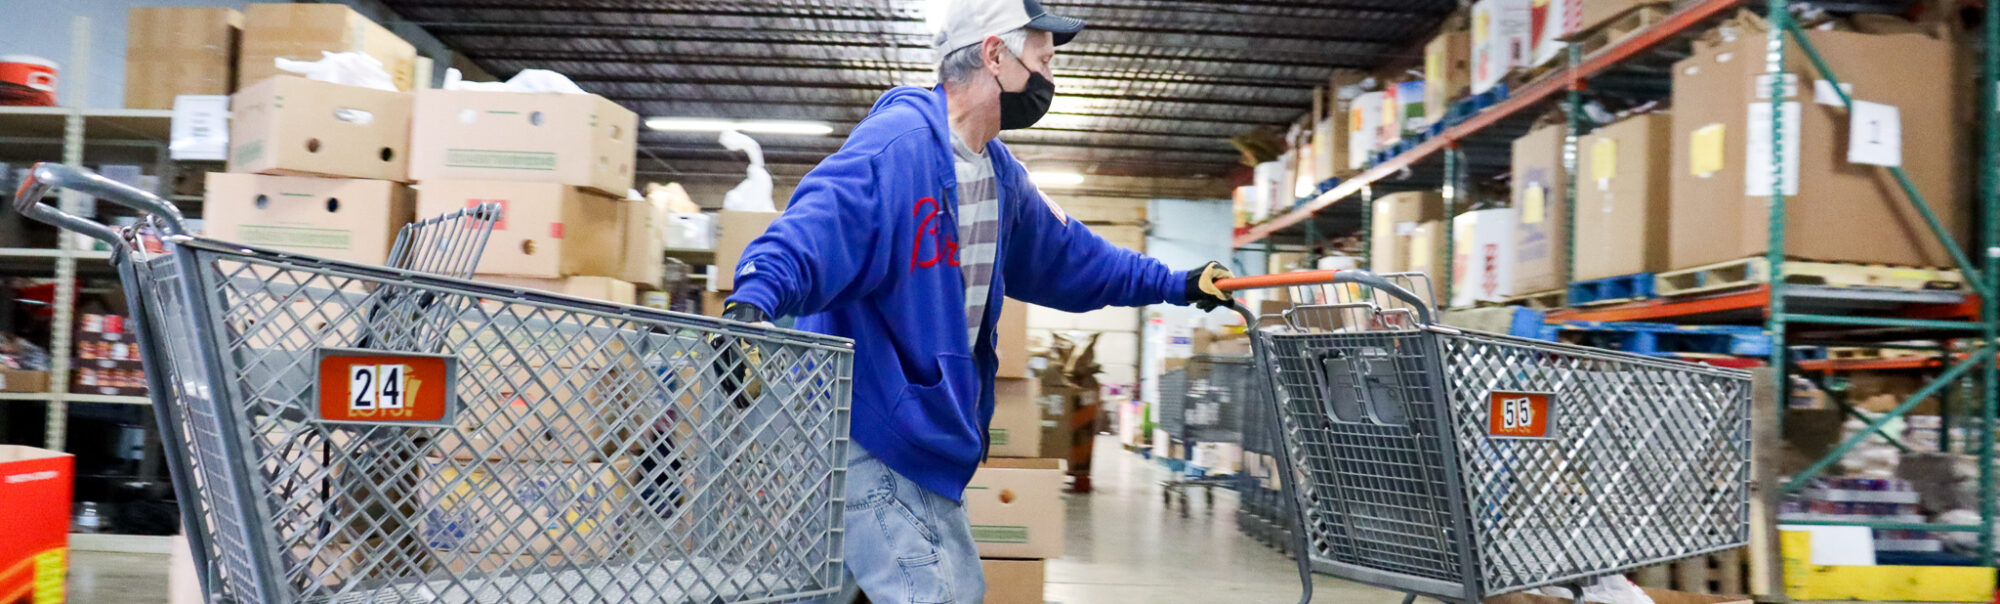 Todd moving shopping carts during distribution